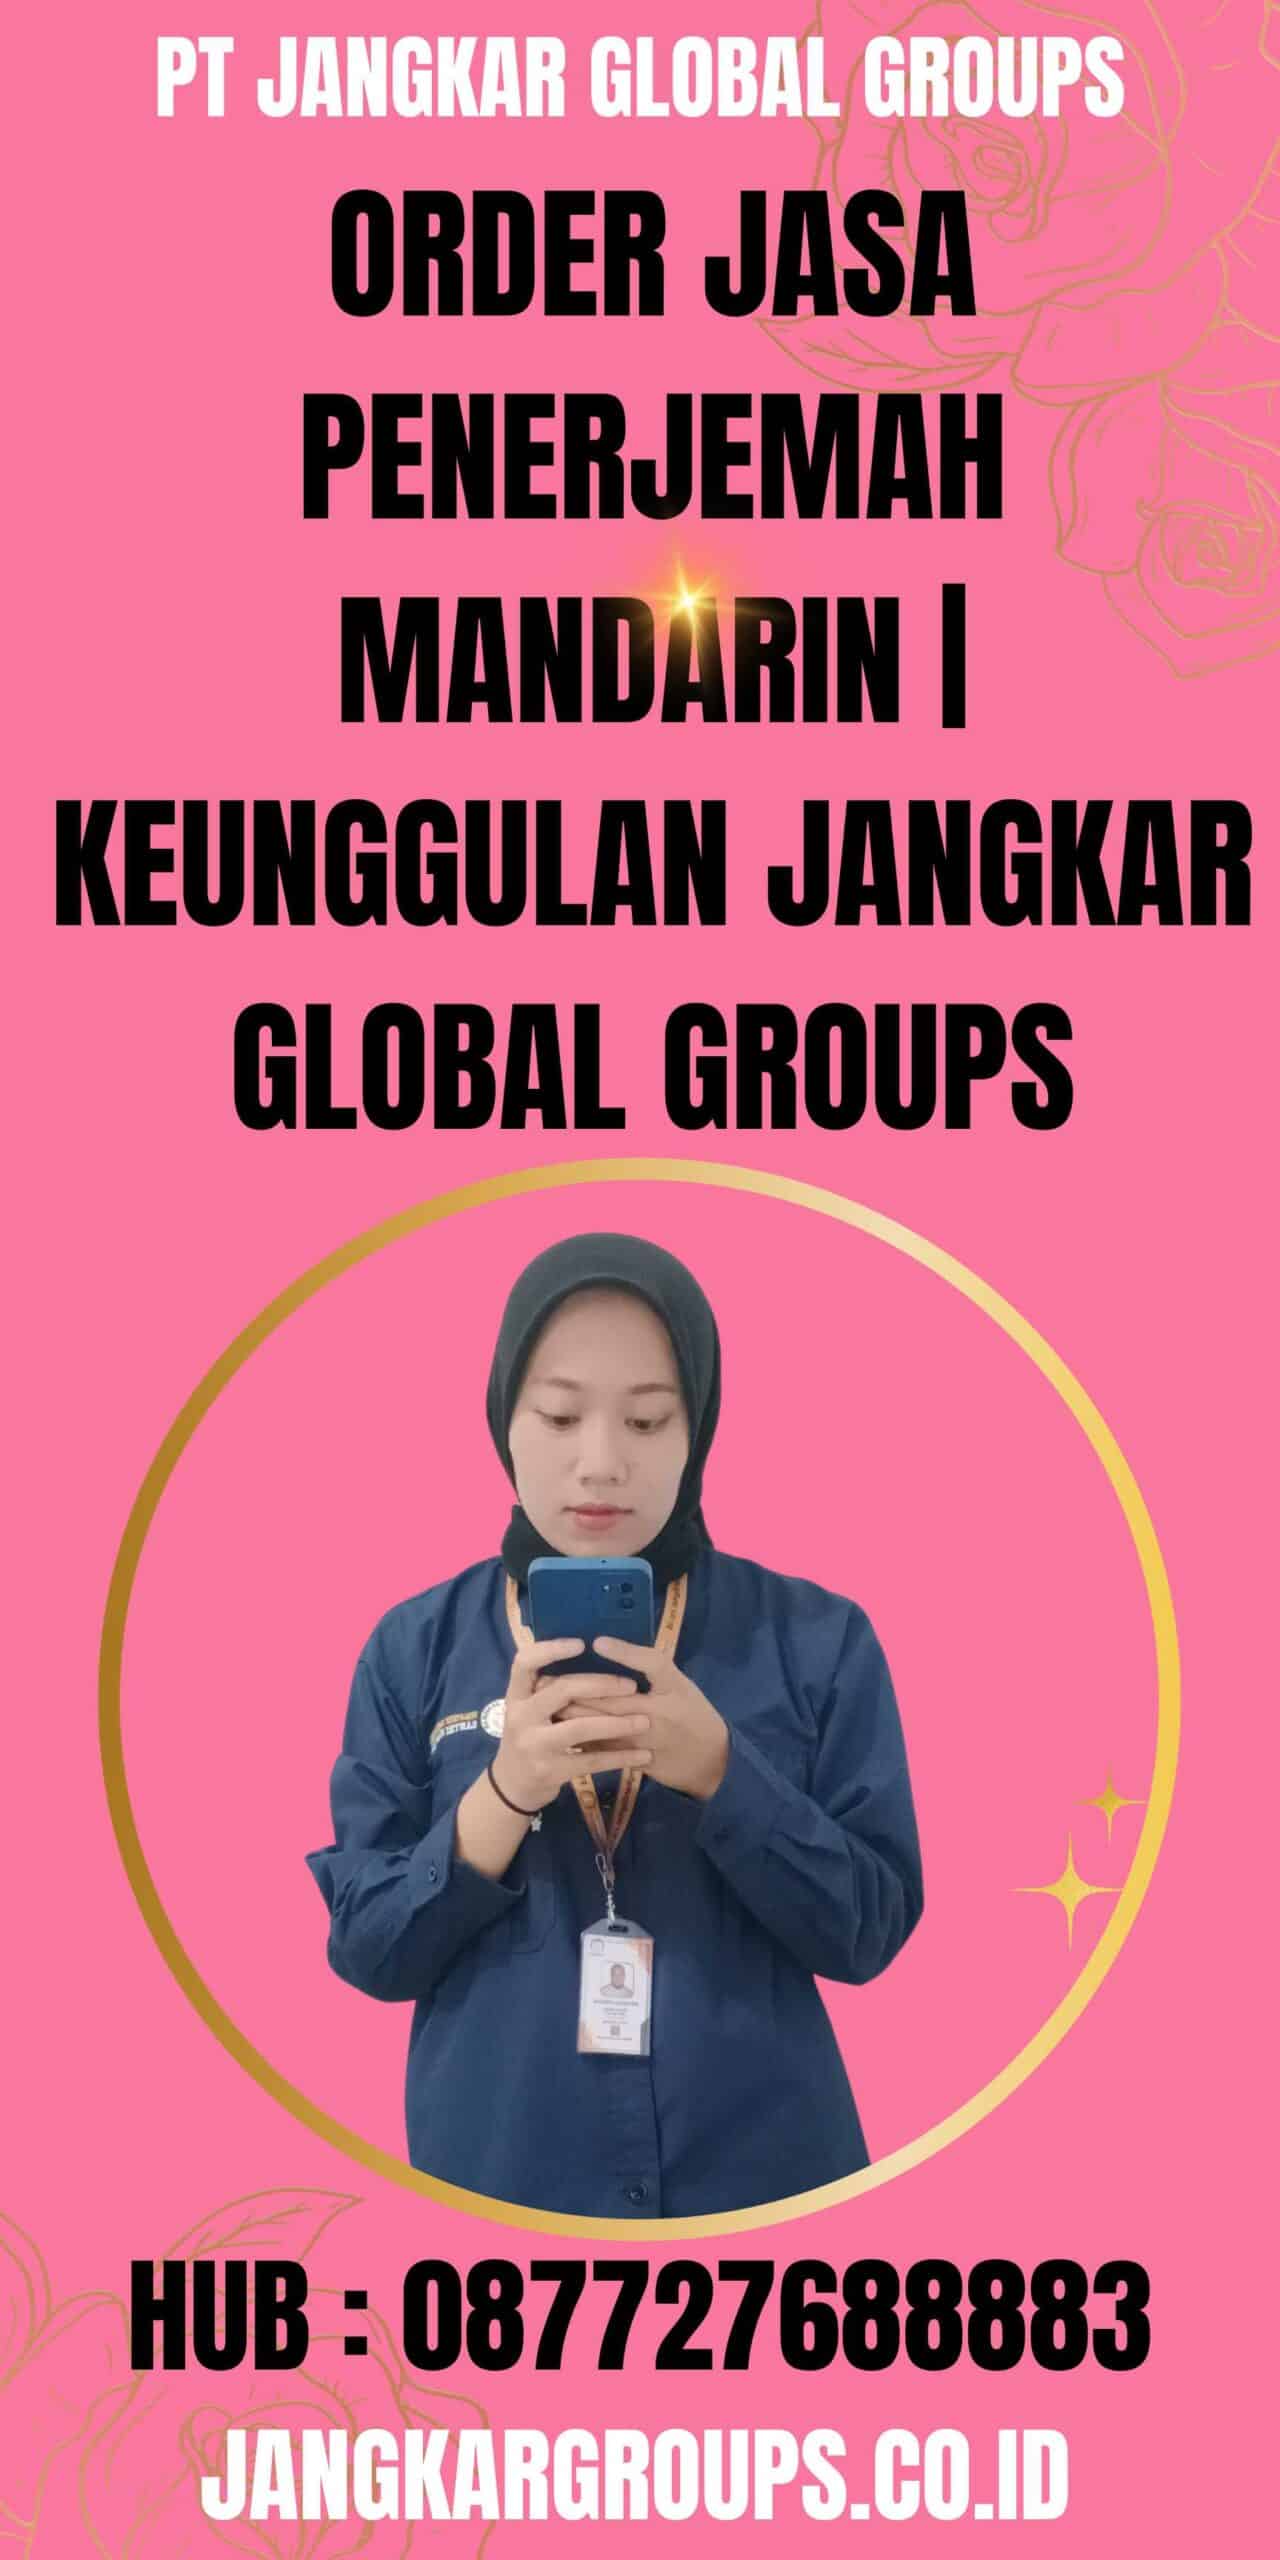 Order Jasa Penerjemah Mandarin Keunggulan Jangkar Global Groups